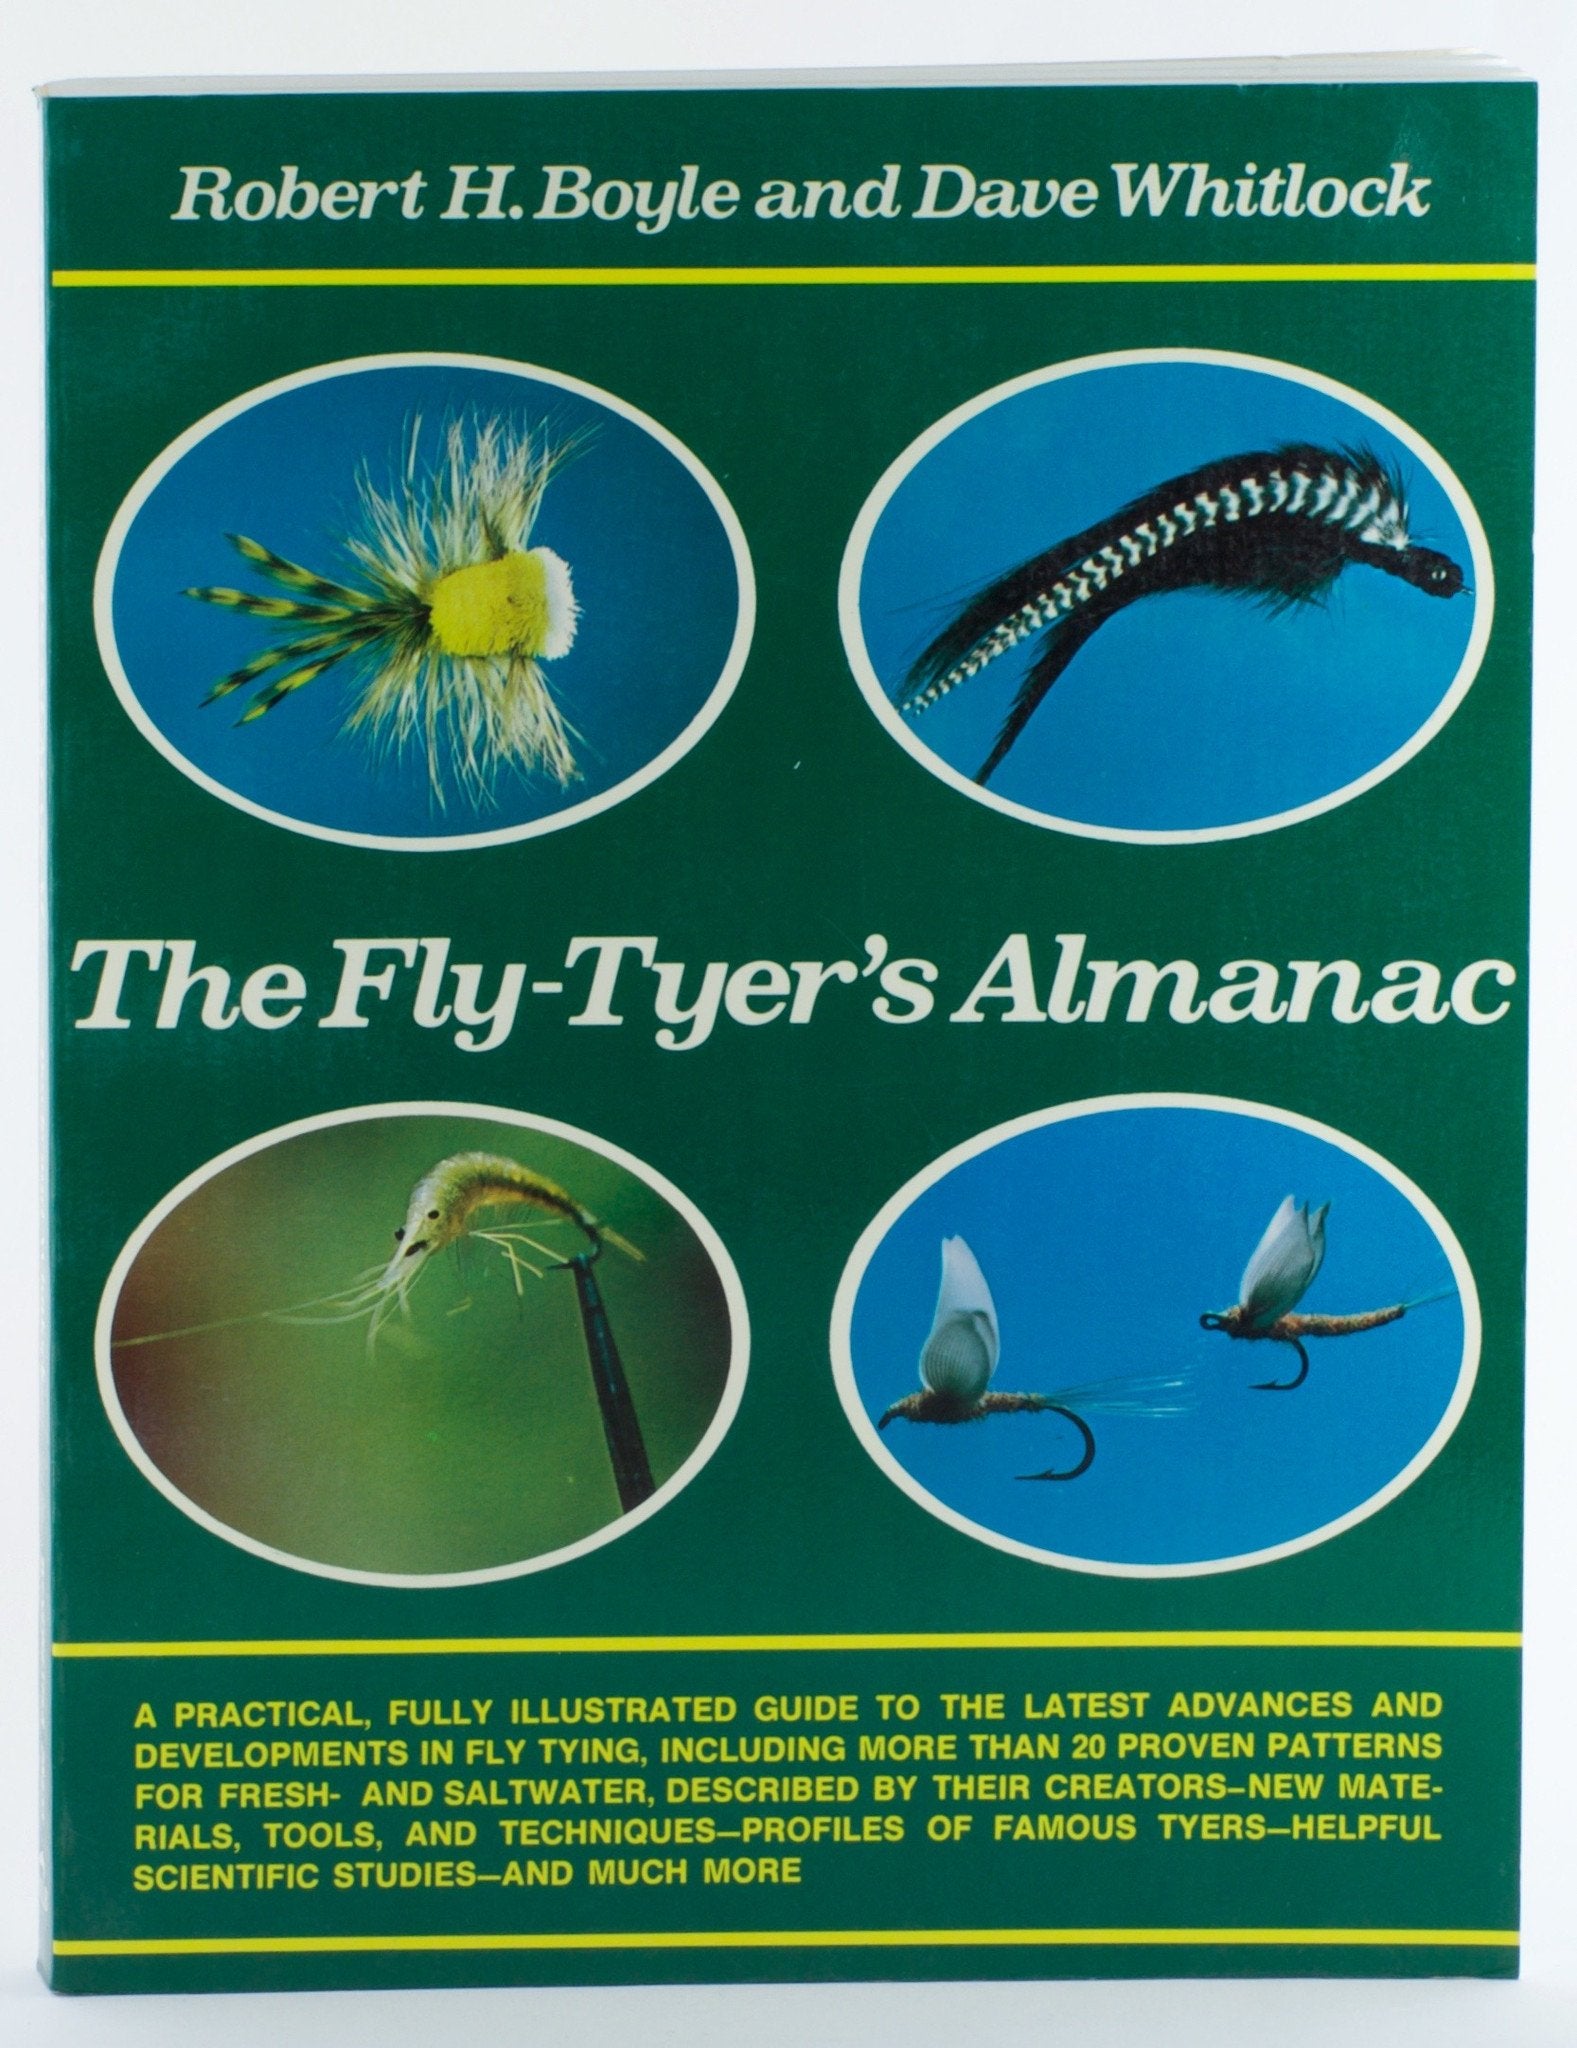 Boyle / Whitlock - "The Fly-Tyer's Almanac" 